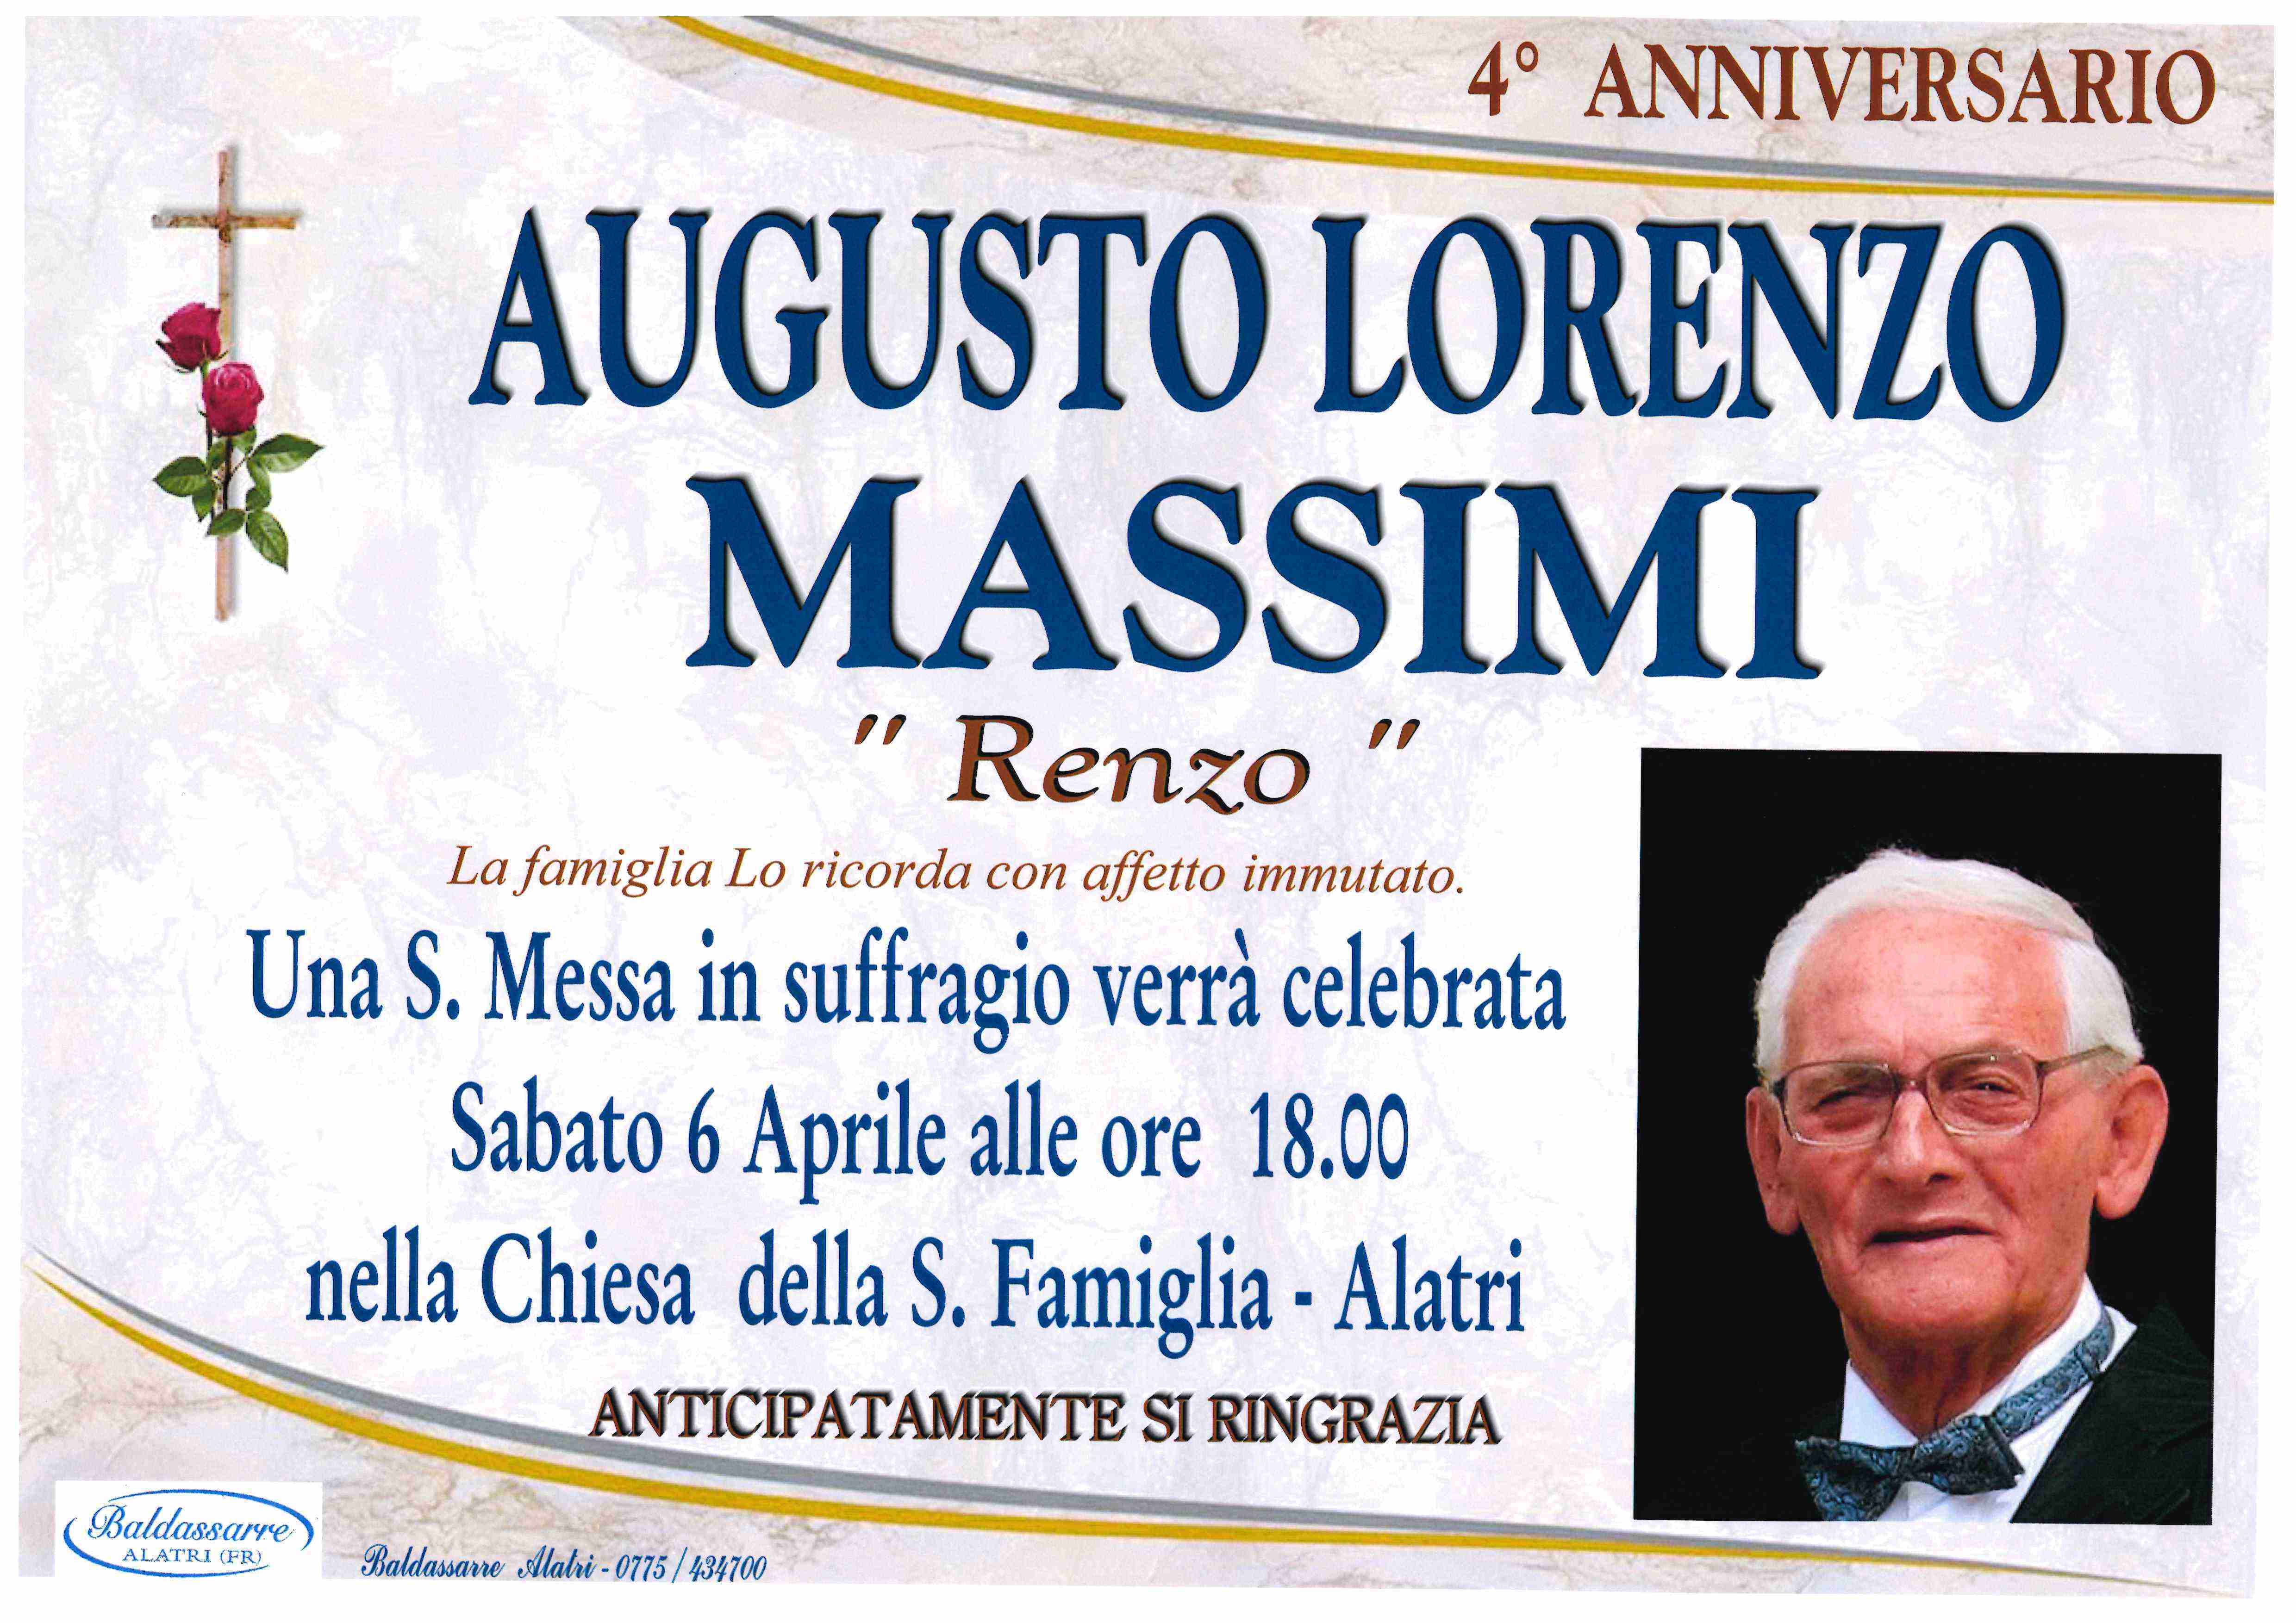 Augusto Lorenzo Massimi